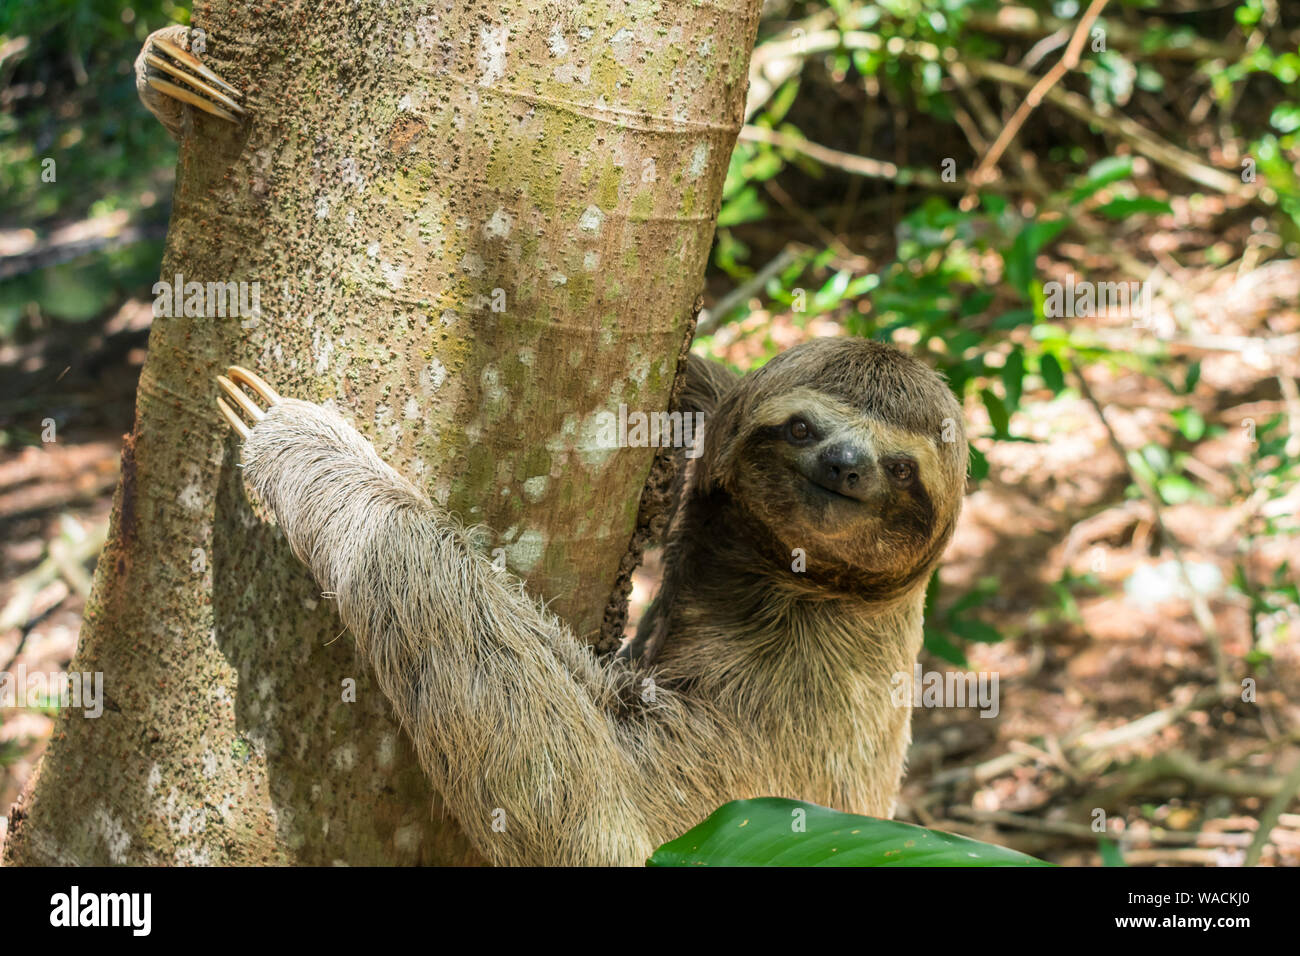 Cute sloth (Bradypus variegatus) on a tree looking at the camera - Itamaraca island, Pernambuco state, Brazil Stock Photo